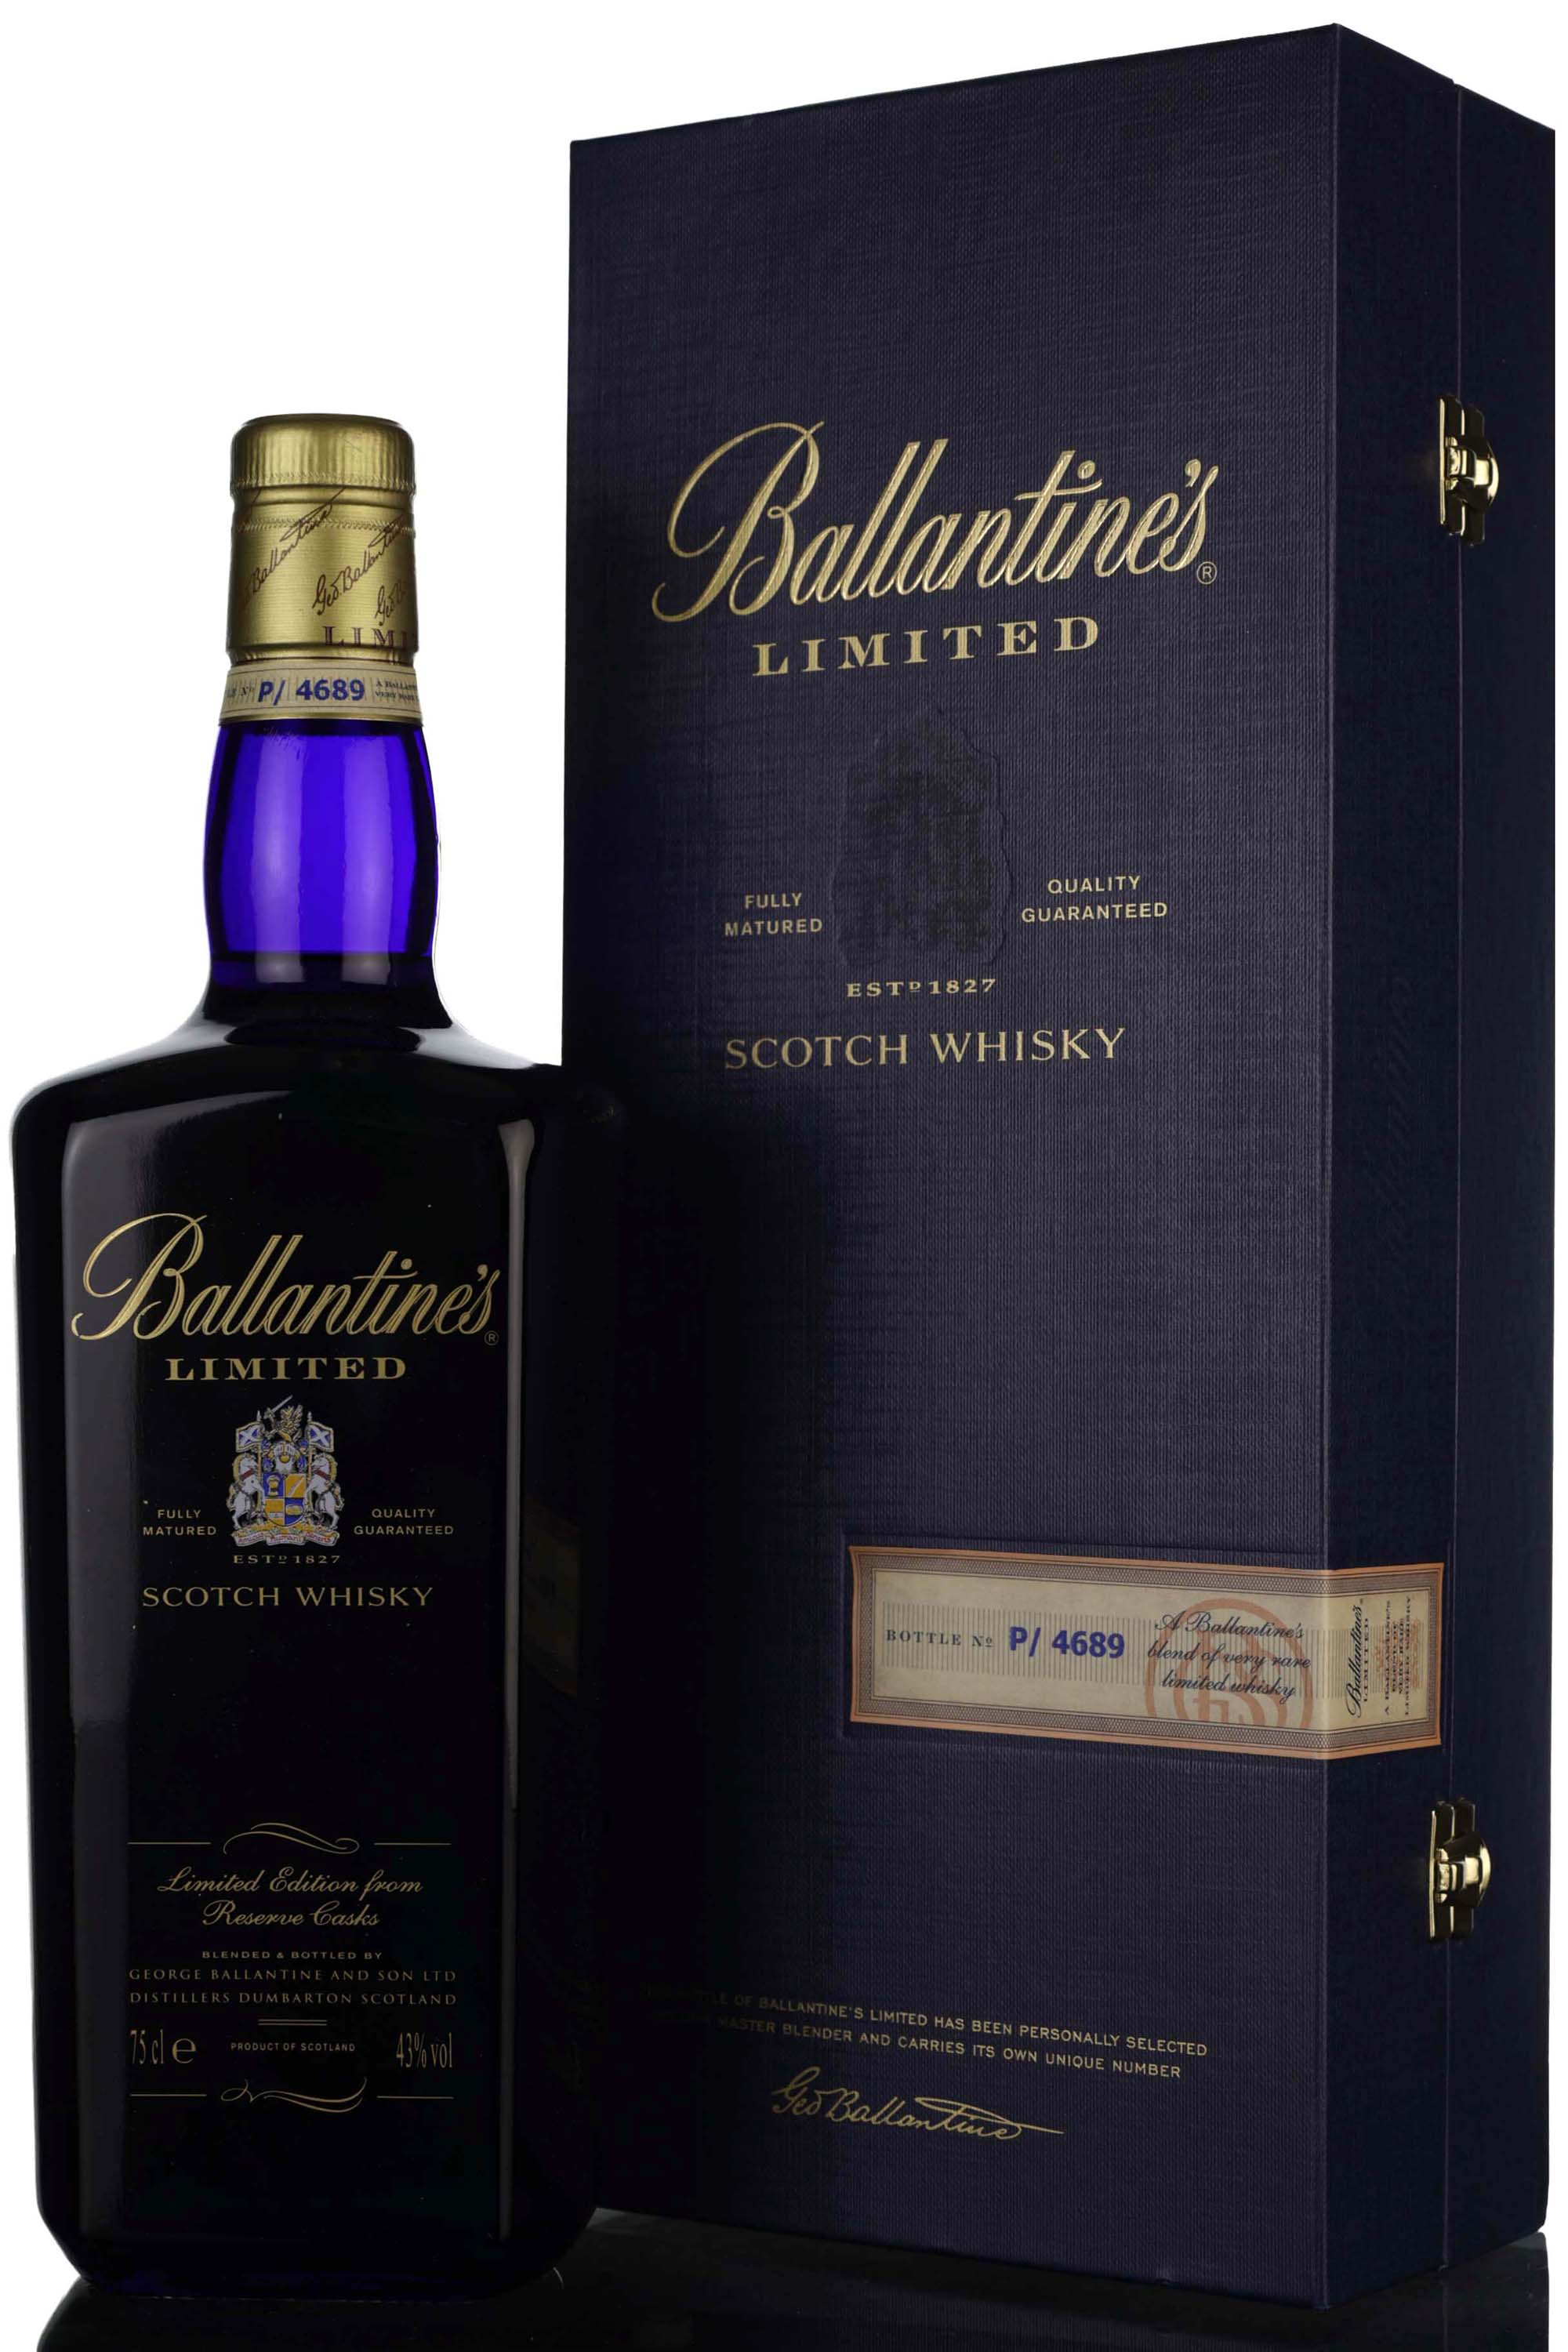 Ballantines Limited Edition